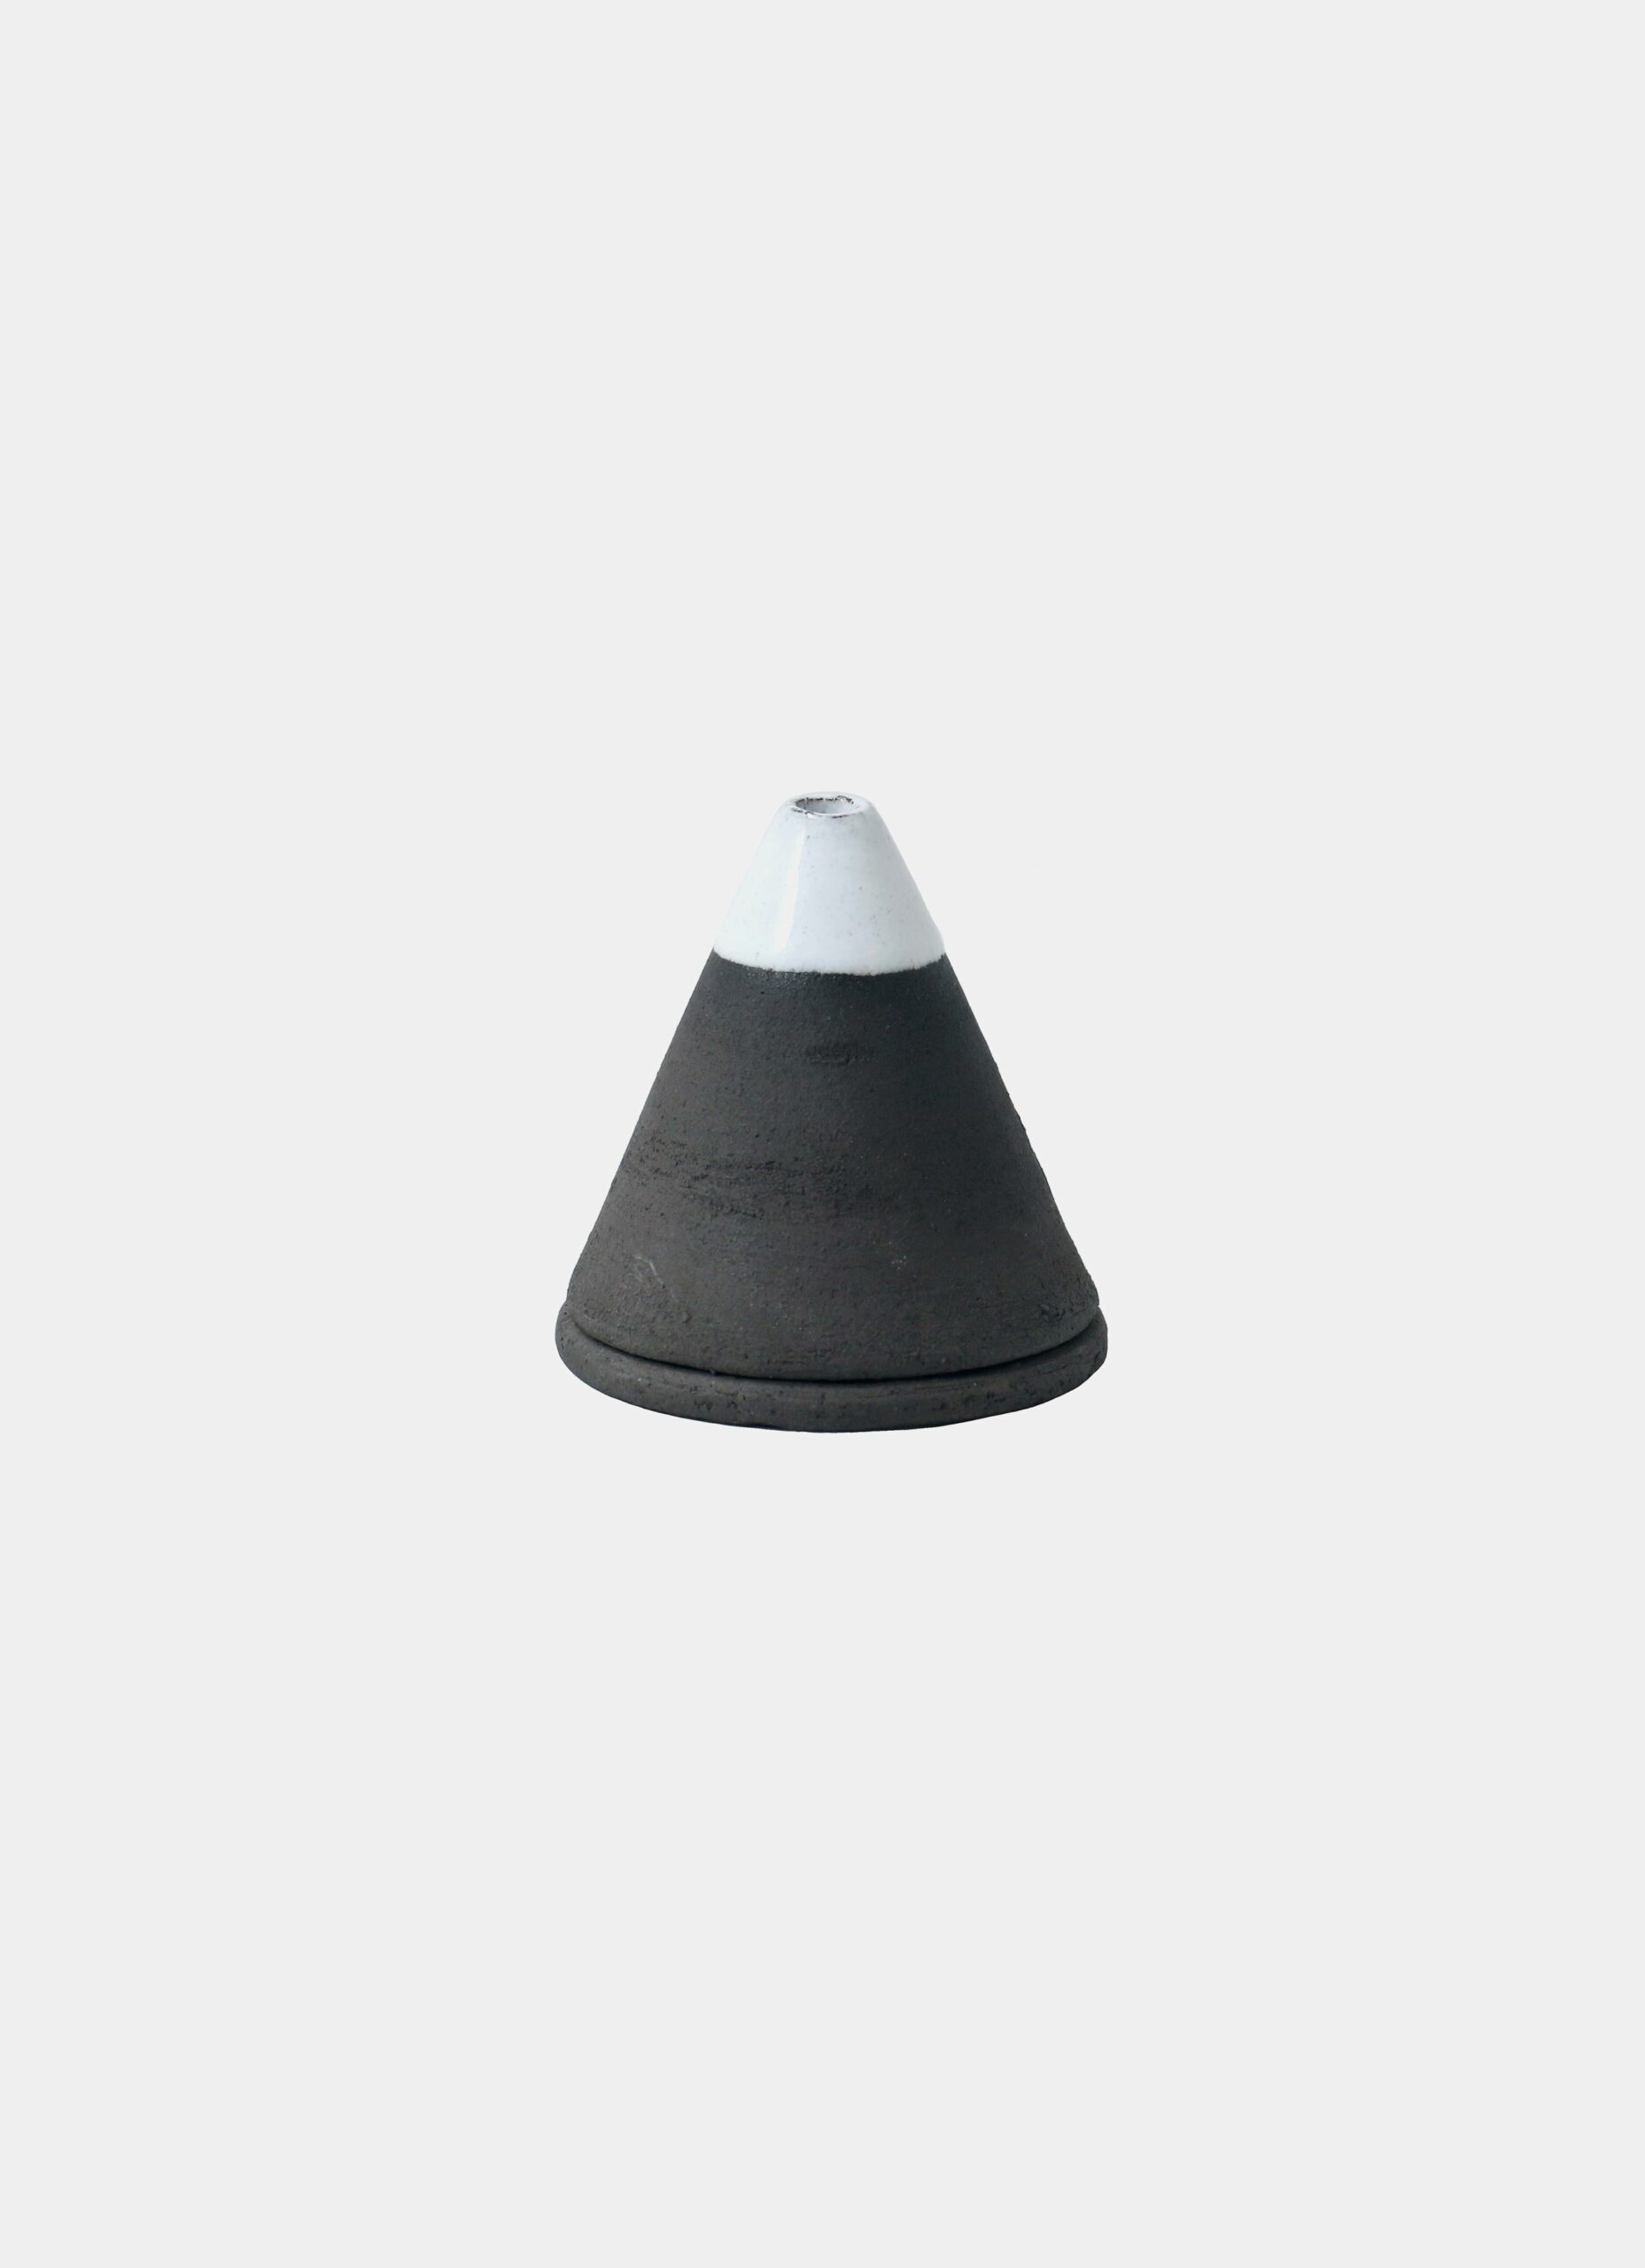 Studio Arhoj - Smoke Mountain - Katla - Incense holder and burner